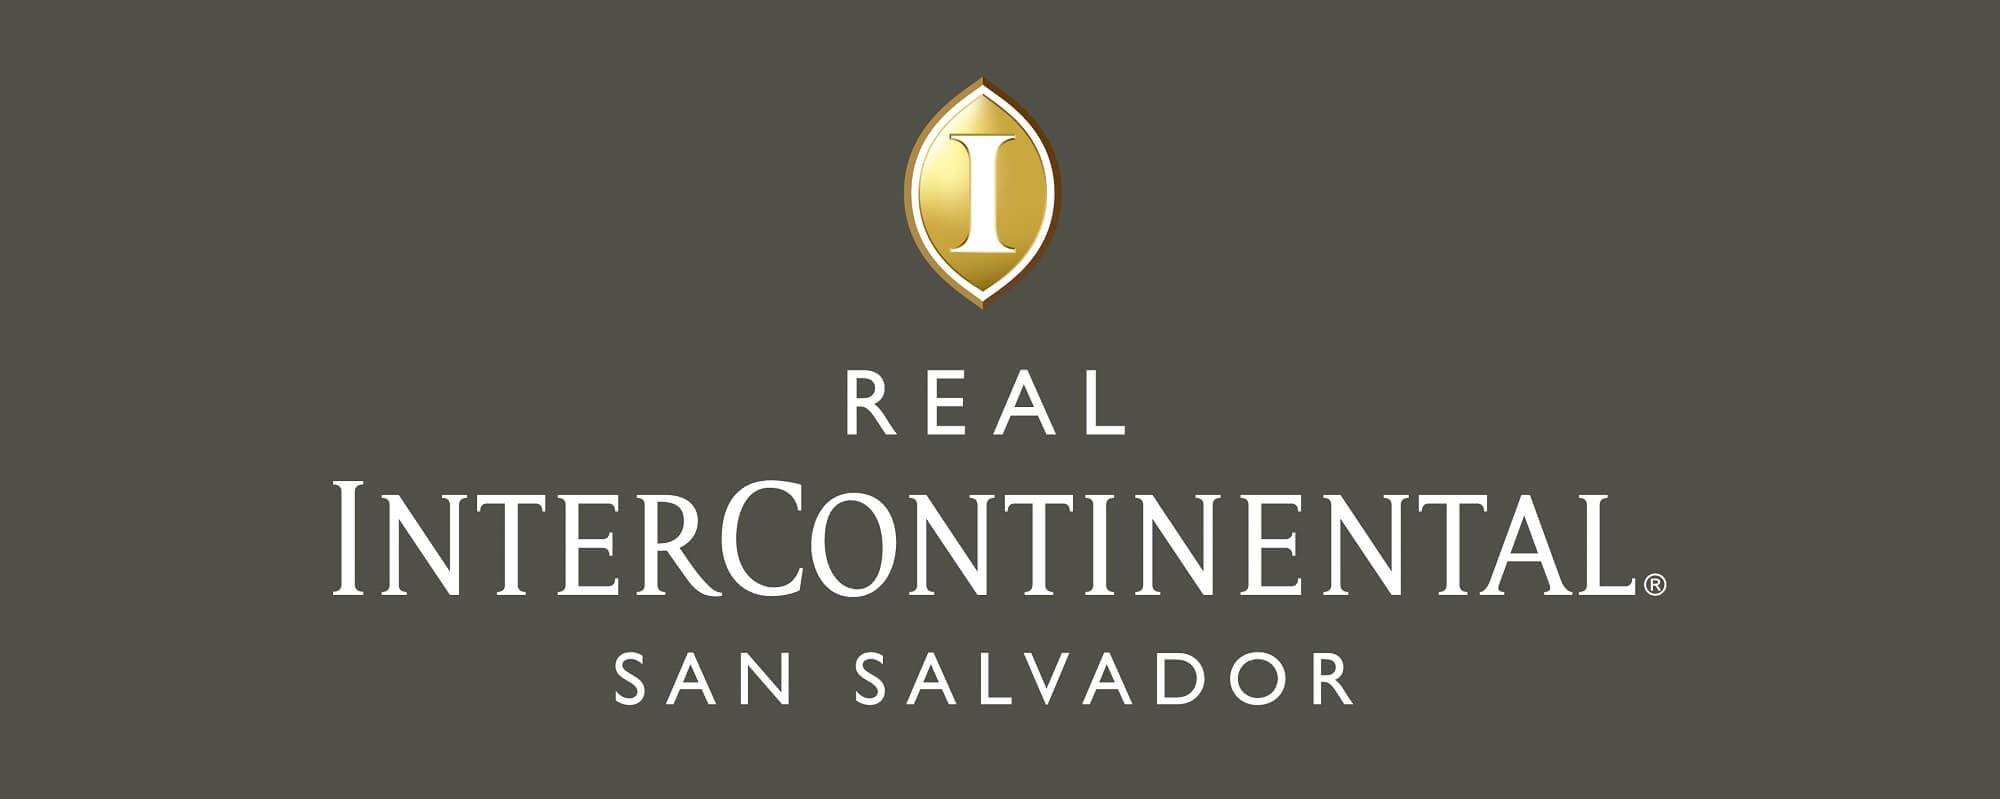 Hotel Real Intercontinental